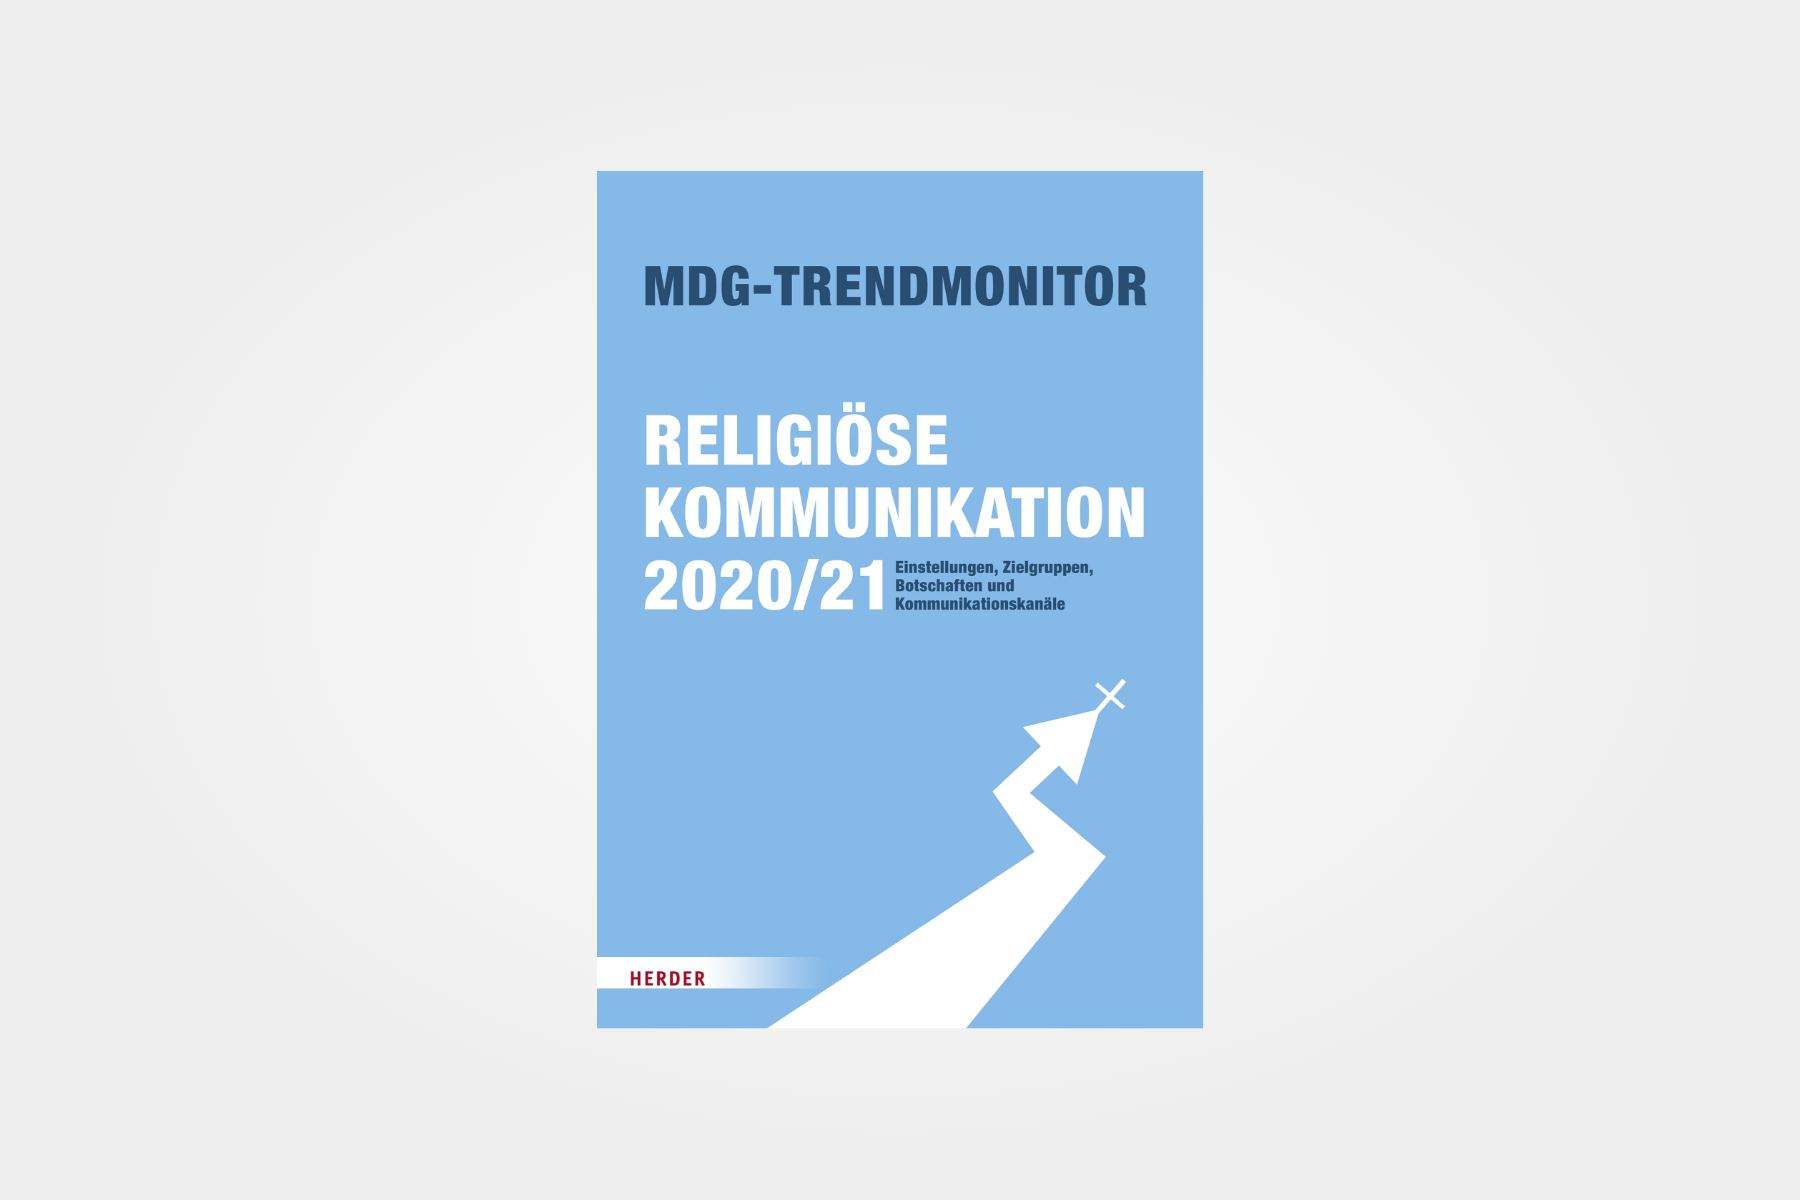 MDG-Trendmonitor - Religiöse Kommunikation 2020/21